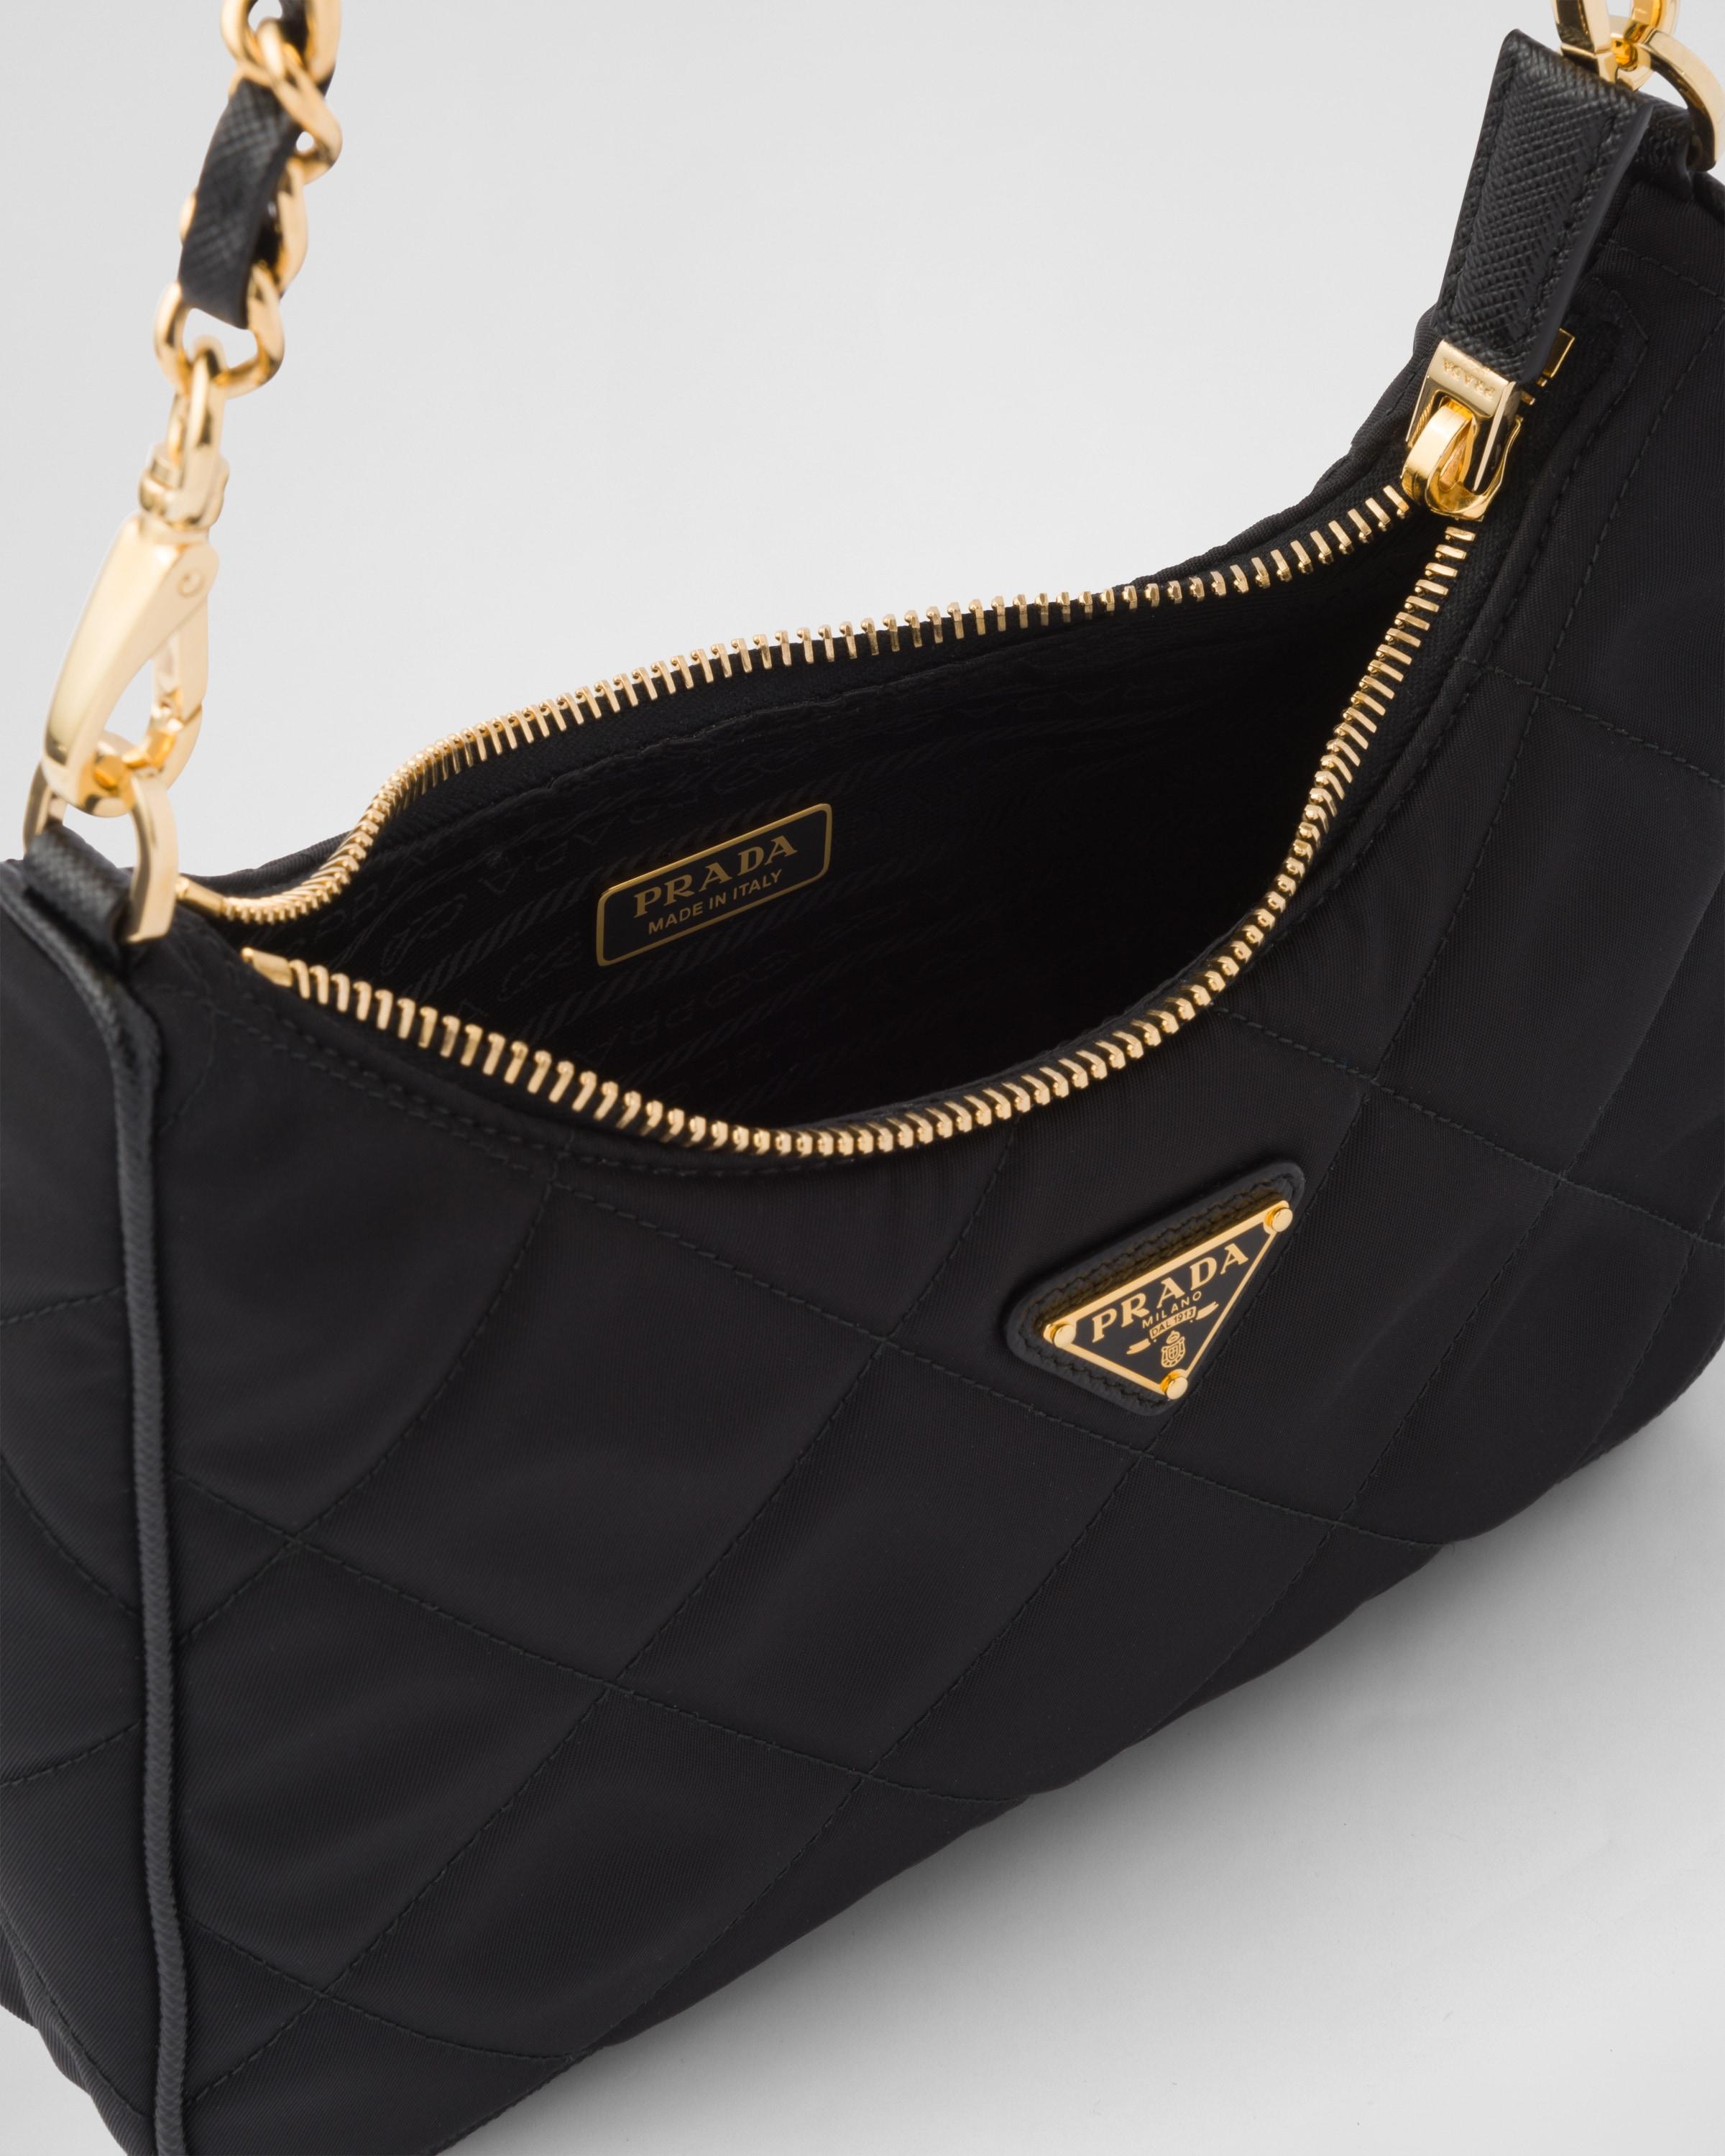 Prada Women's Small Re-Nylon Backpack - Black